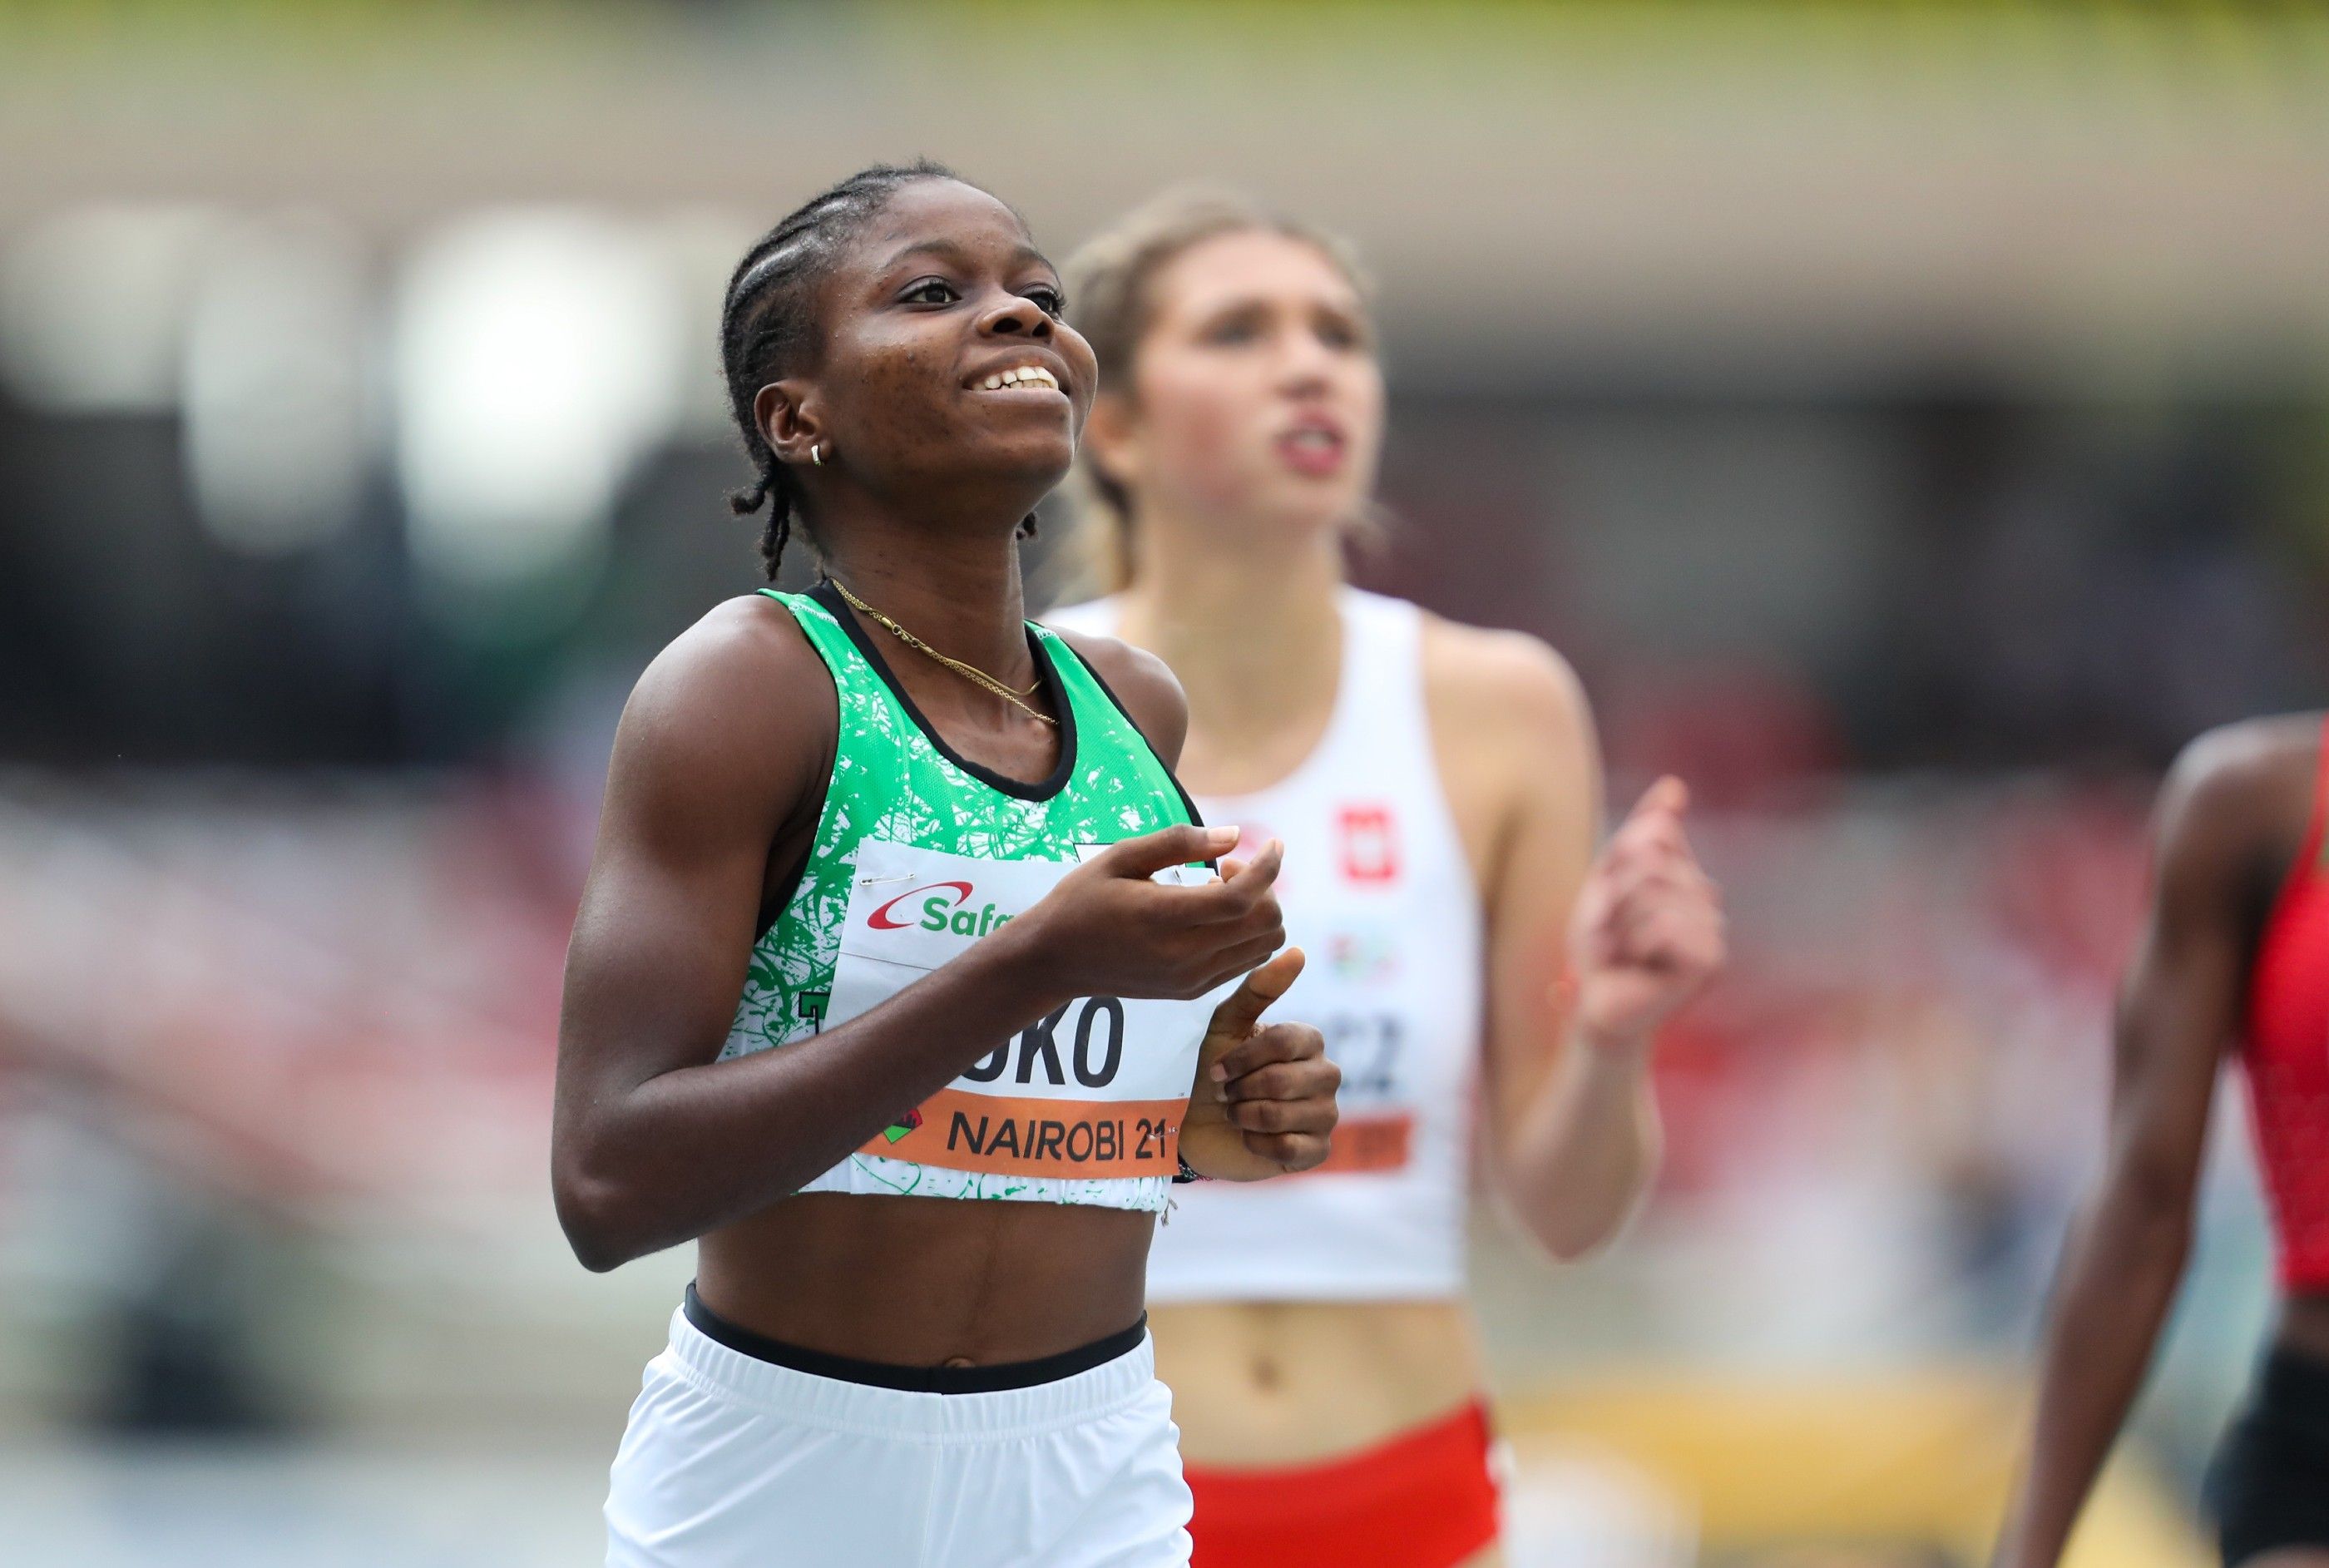 Imaobong Nse Uko wins the women's 400m title at the World U20 Championships in Nairobi